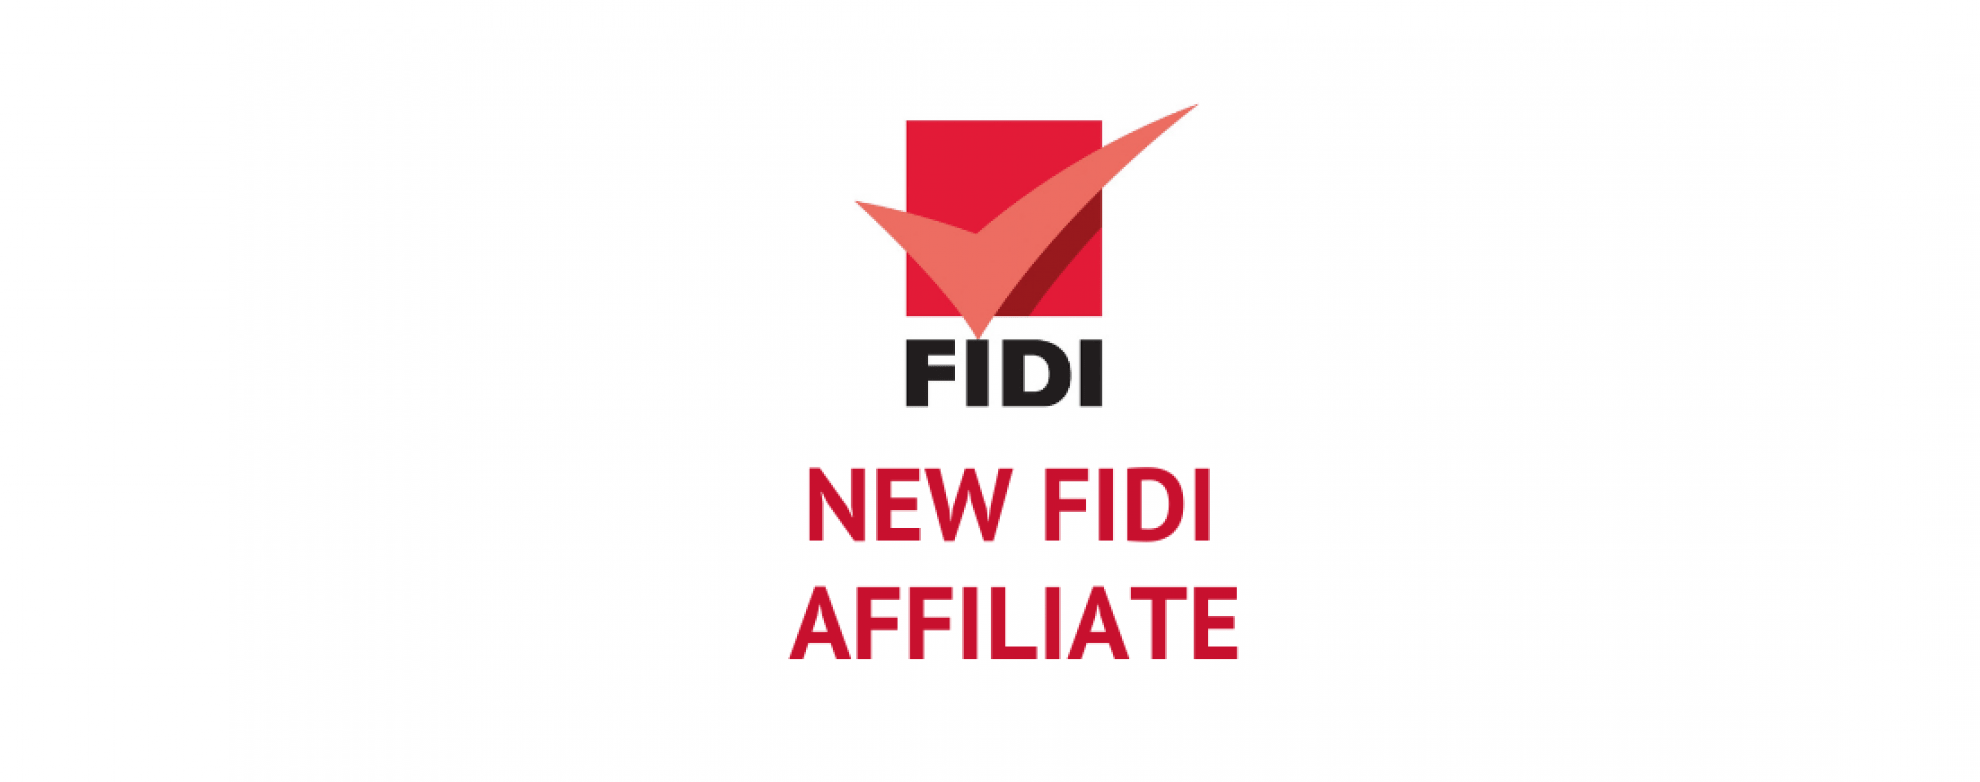 New FIDI Affiliate - ISS Relocations, Dubai, United Arab Emirates